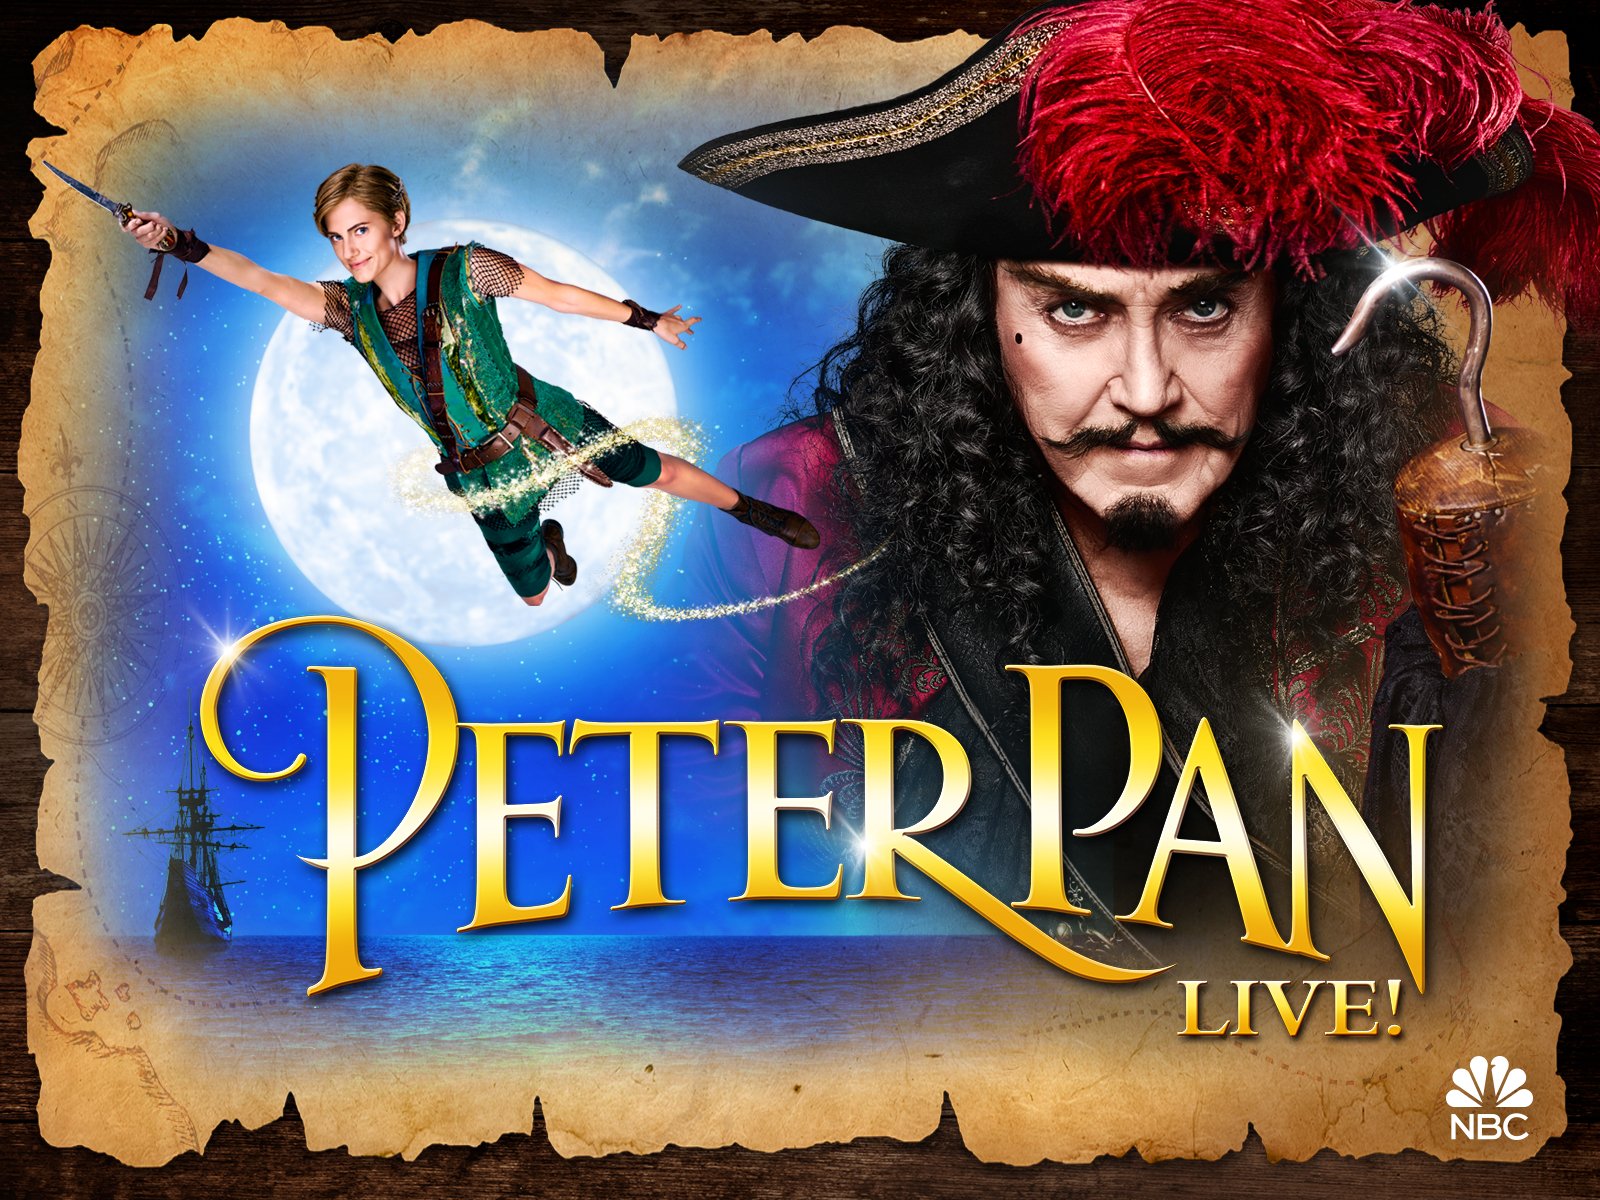 Peter Pan Live - key image.jpg